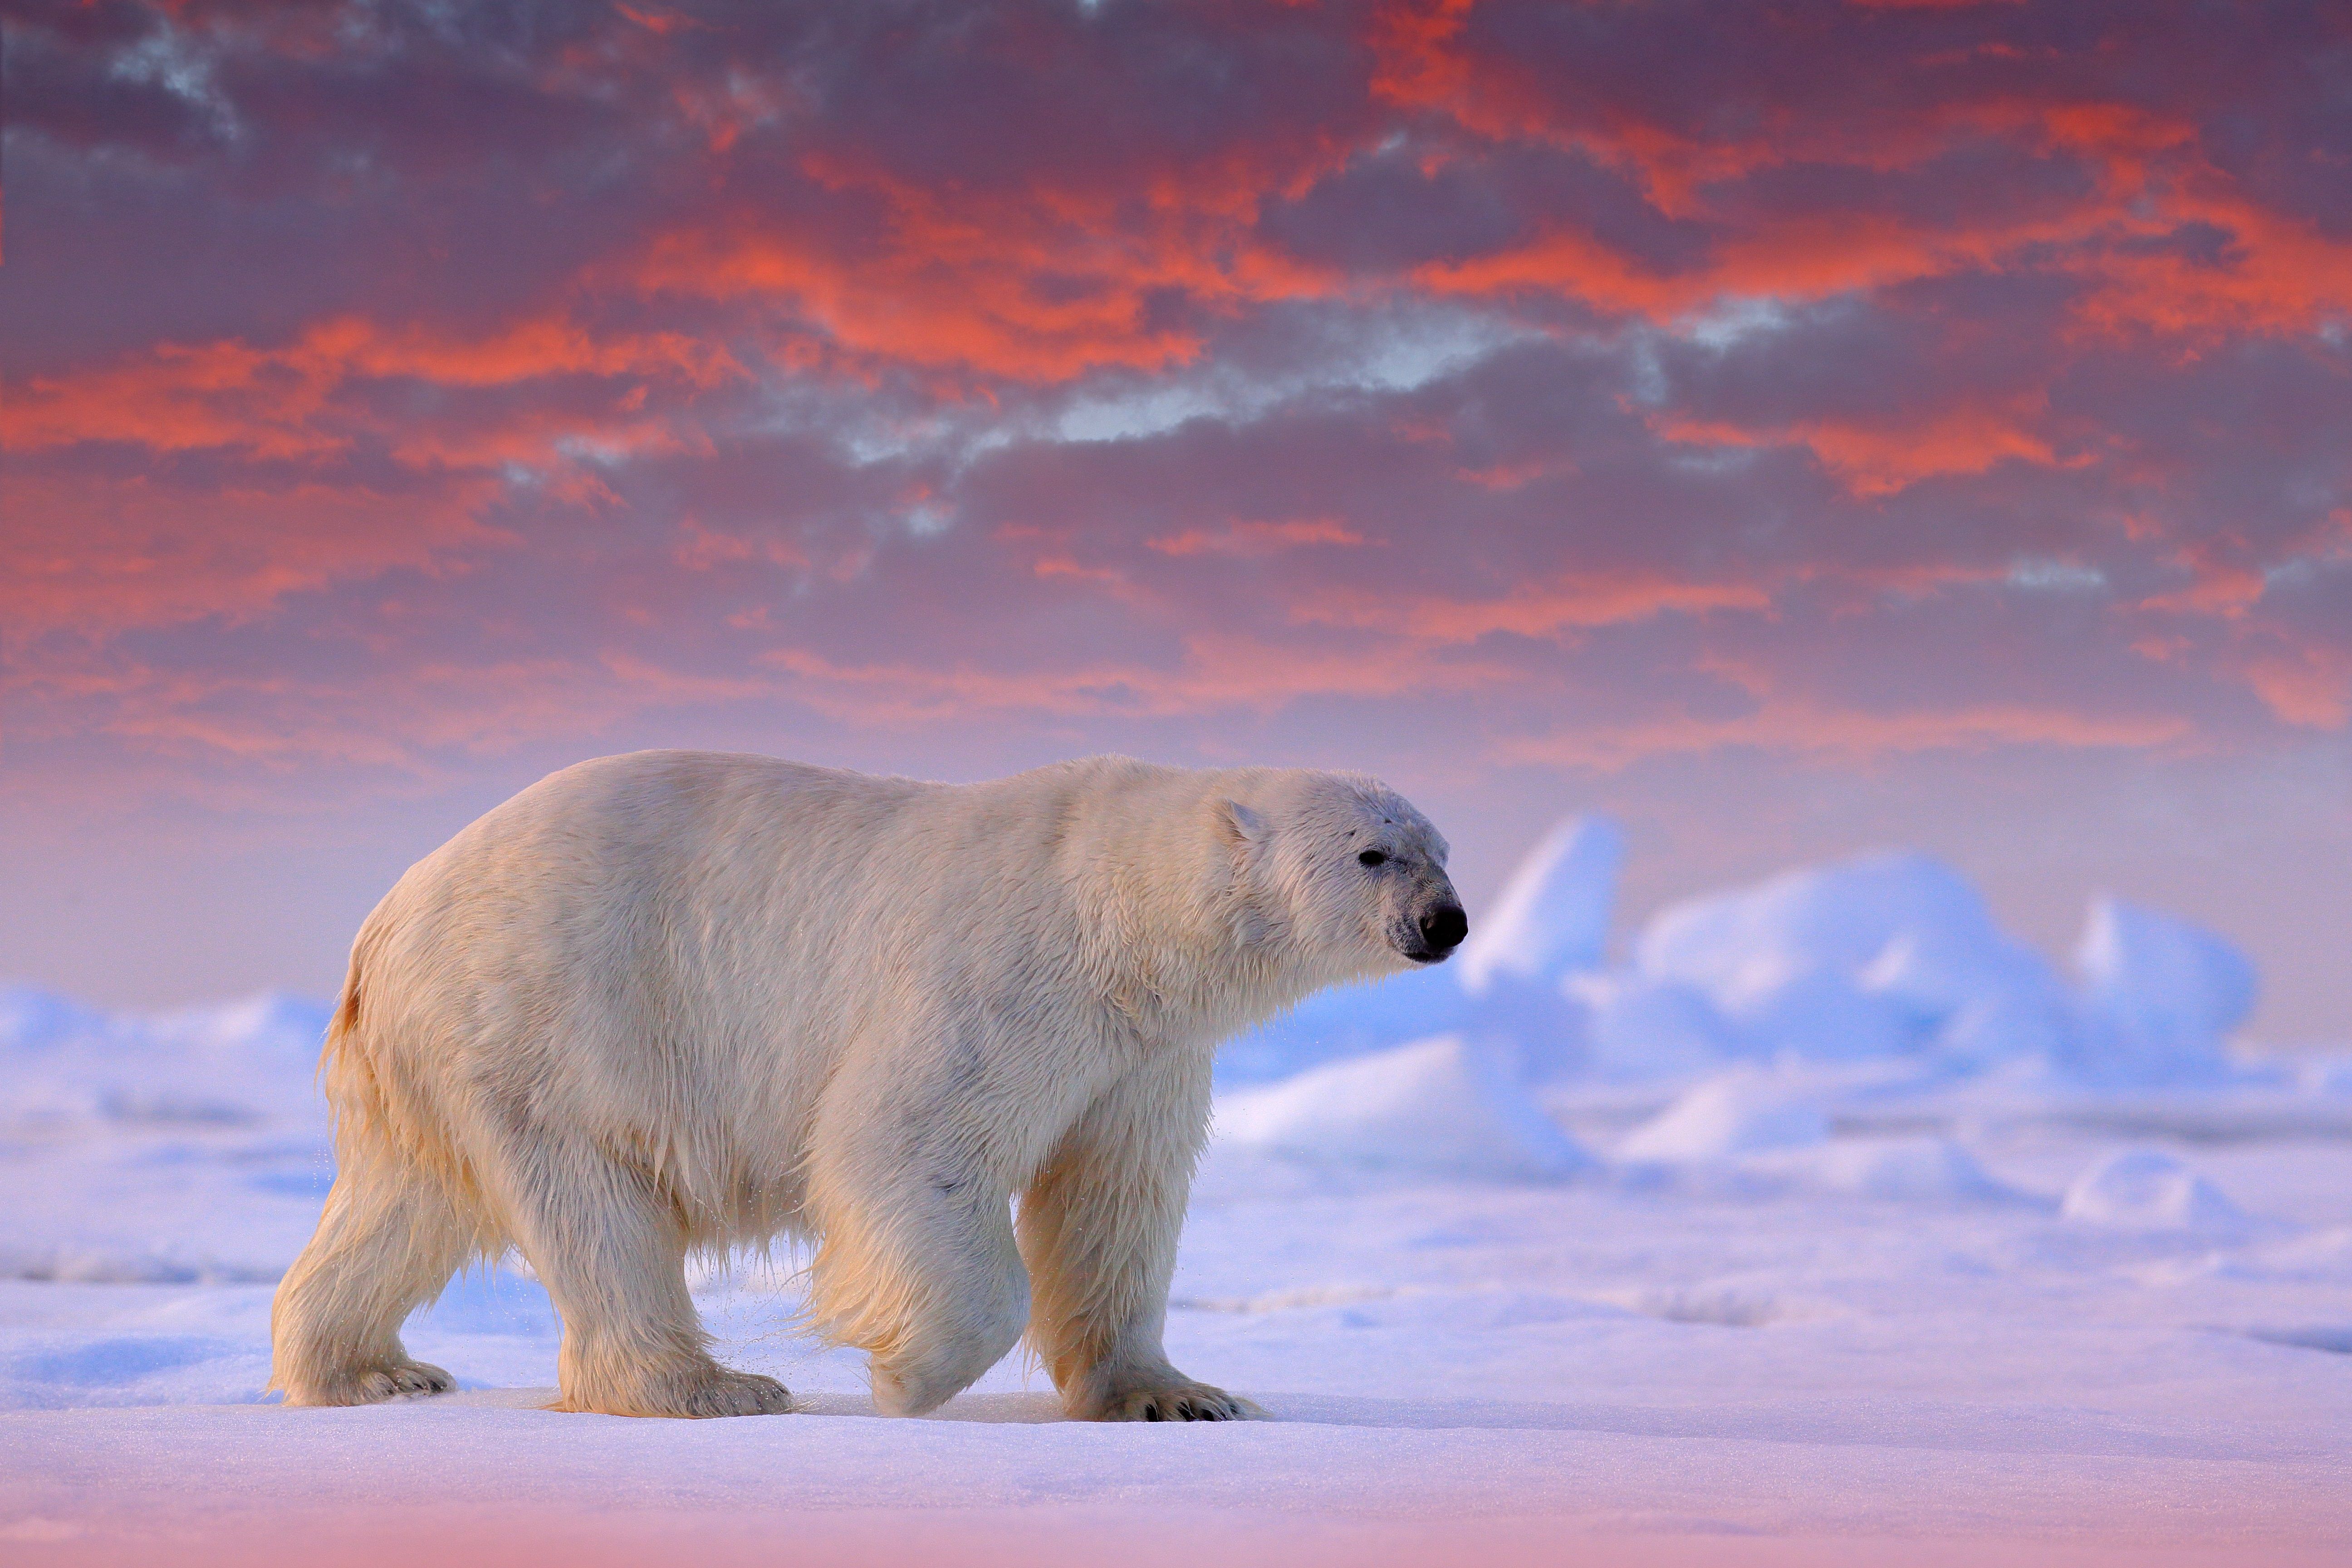 Polar bear at sunset, Svalbard